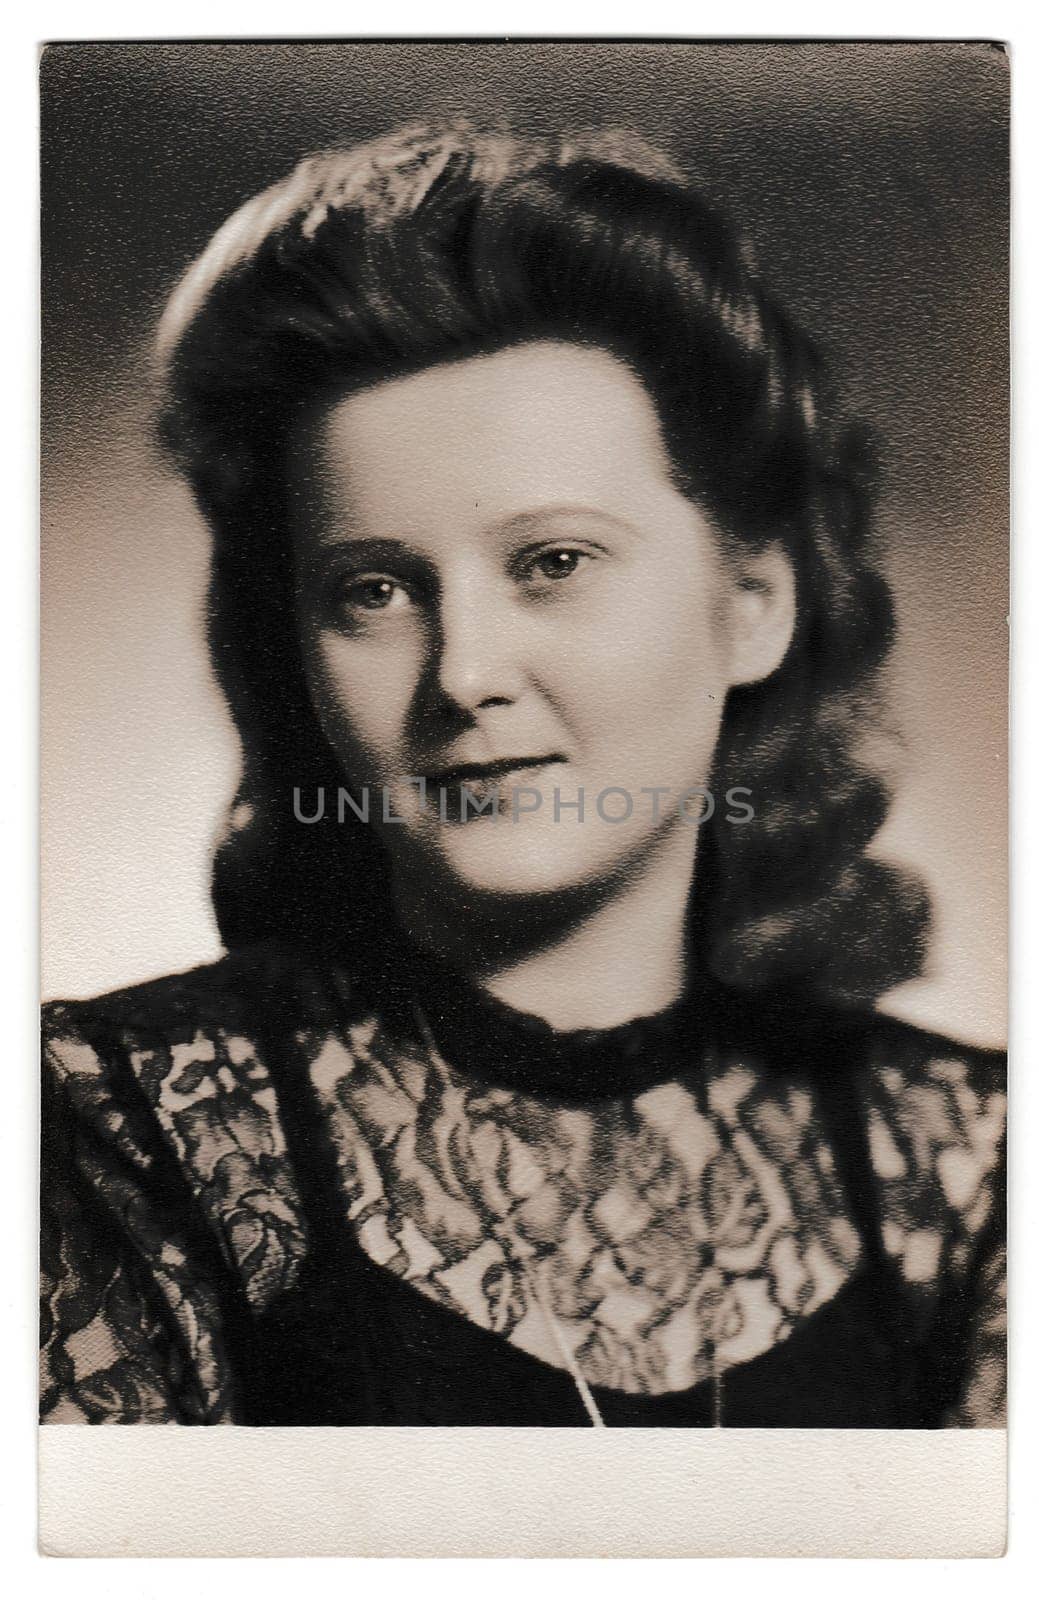 THE CZECHOSLOVAK SOCIALIST REPUBLIC - CIRCA 1950s: Retro photo shows portrait of young woman. Vintage black and white photography.